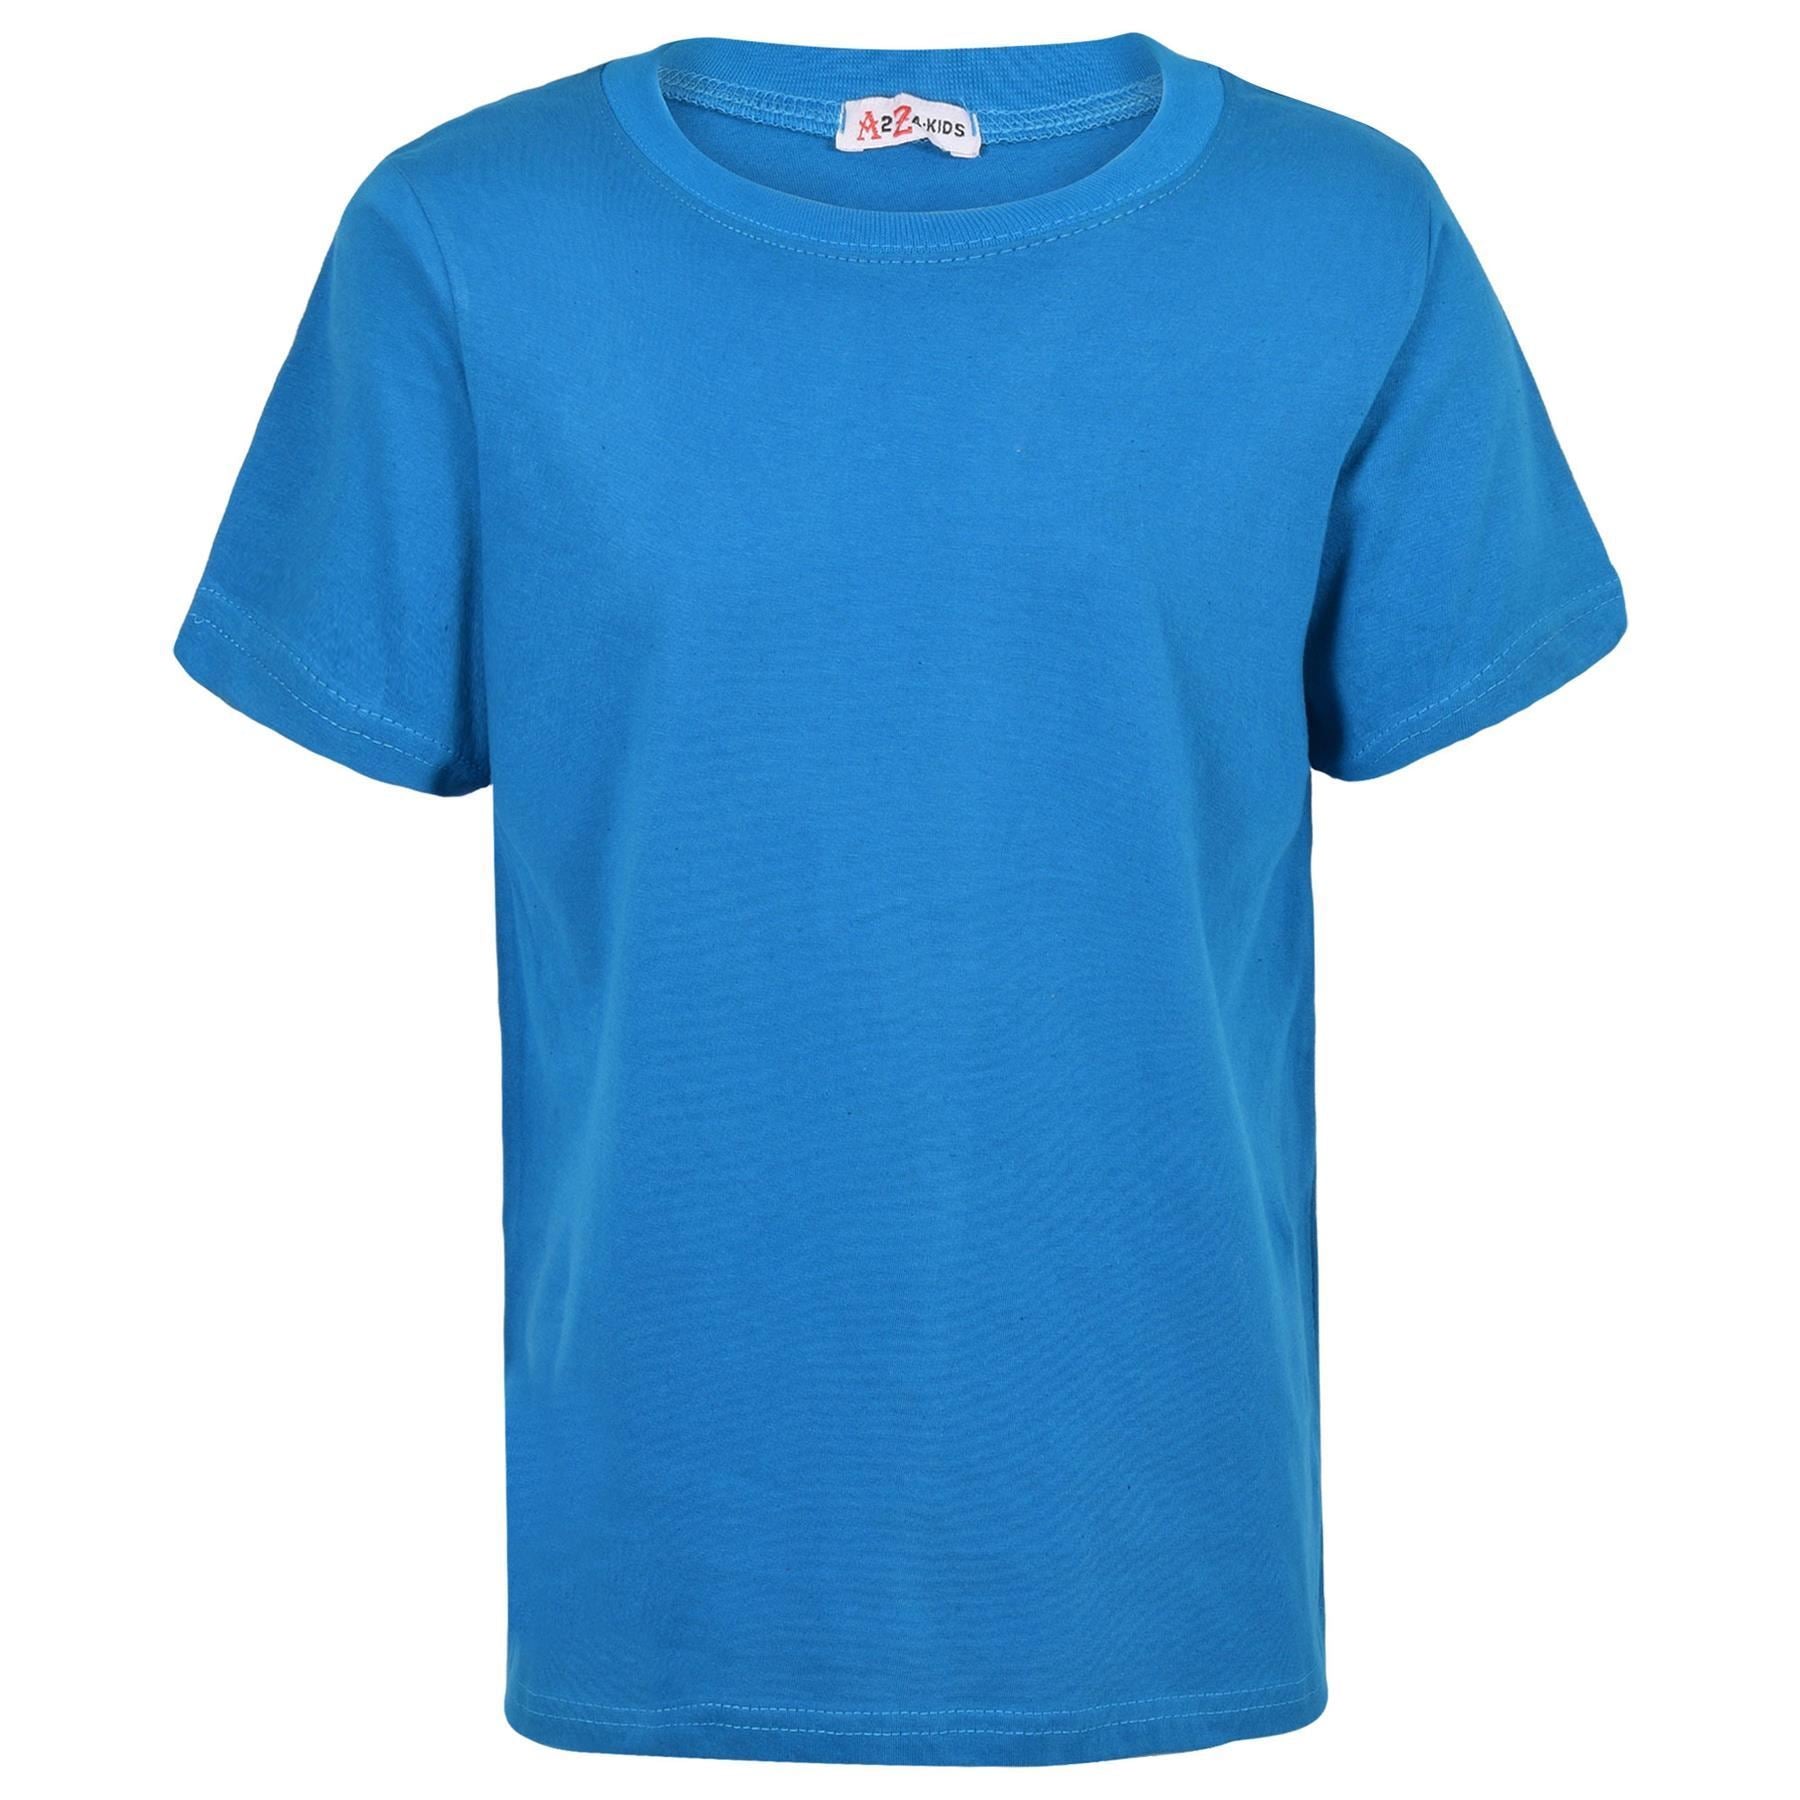 Kids Unisex England Flag Print Football World Cup Soft T Shirt Top